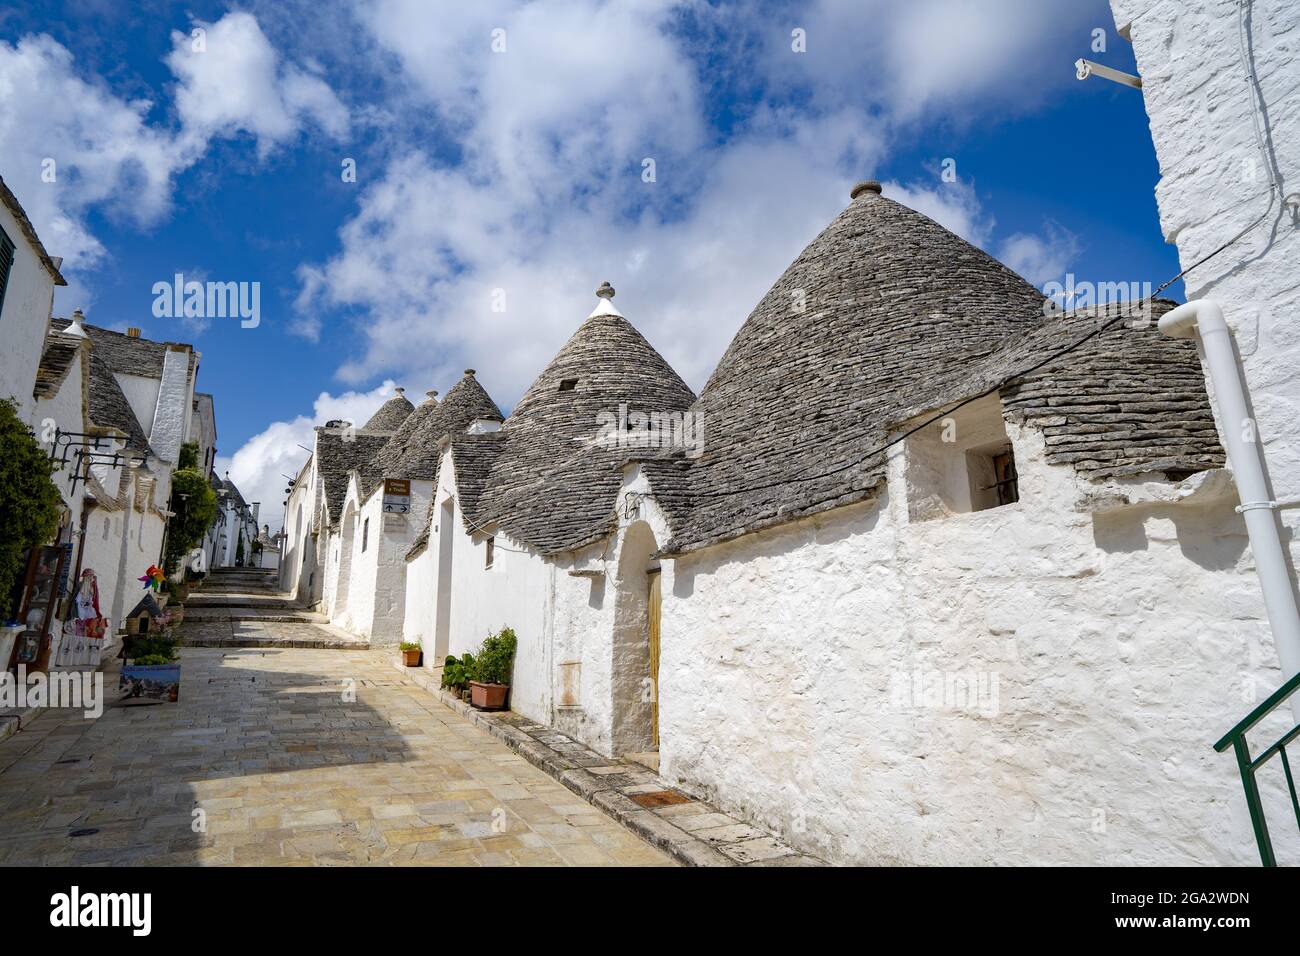 Street scene with a row of traditional Apulian round stone Trulli houses in the town of Alberobello; Alberobello, Puglia, Italy Stock Photo